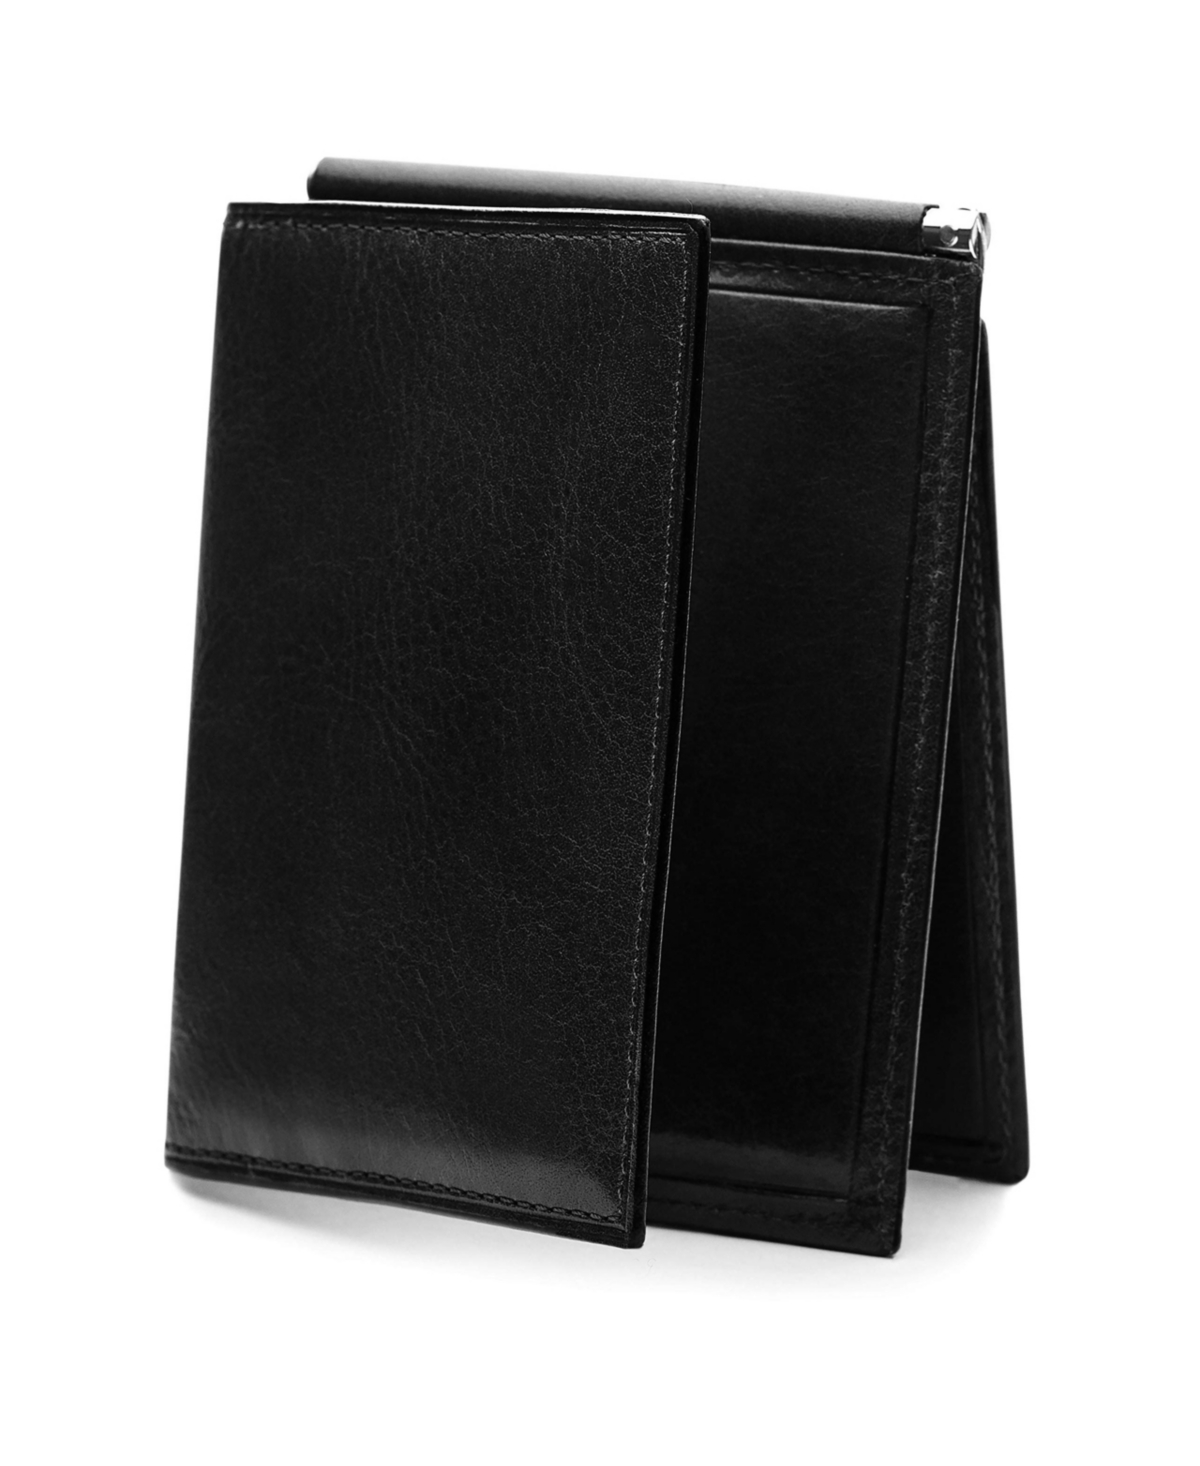 Men's Leather Money Clip with pocket - Black